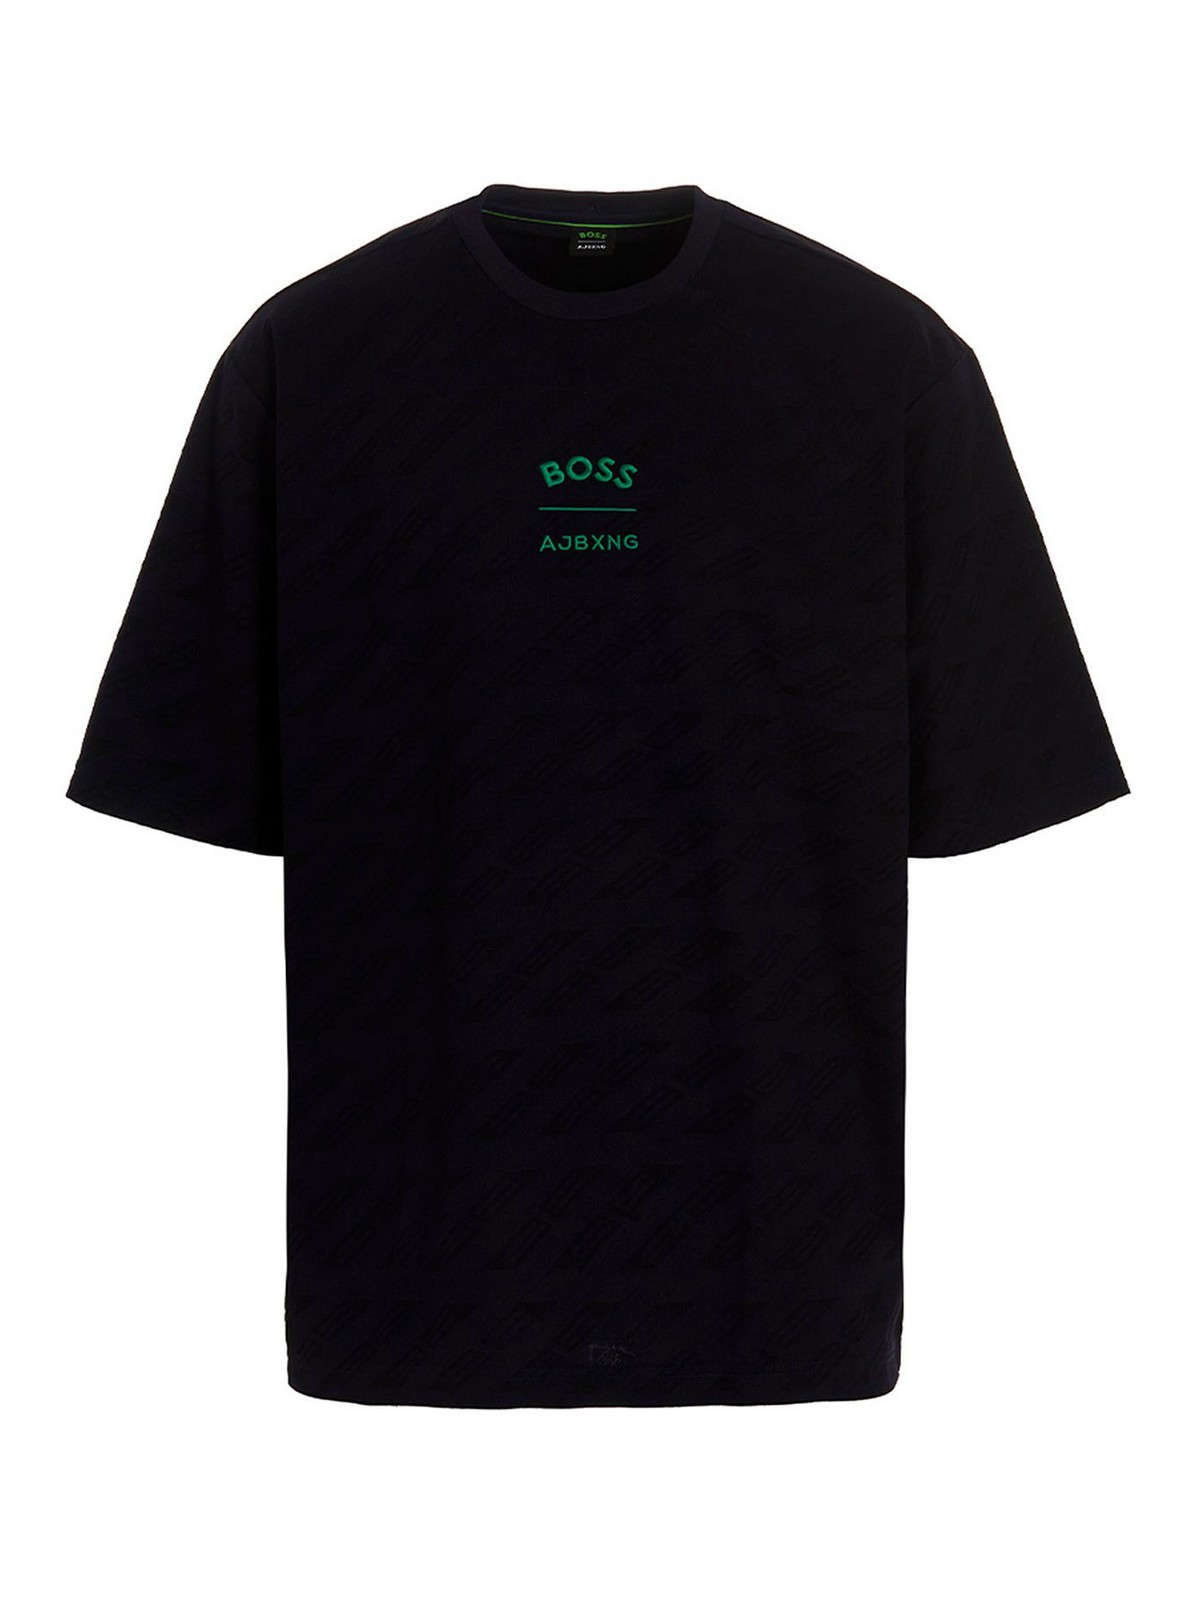 T-shirts Hugo Boss - Ajbxng T-shirt - 50488786402 | Shop online at iKRIX